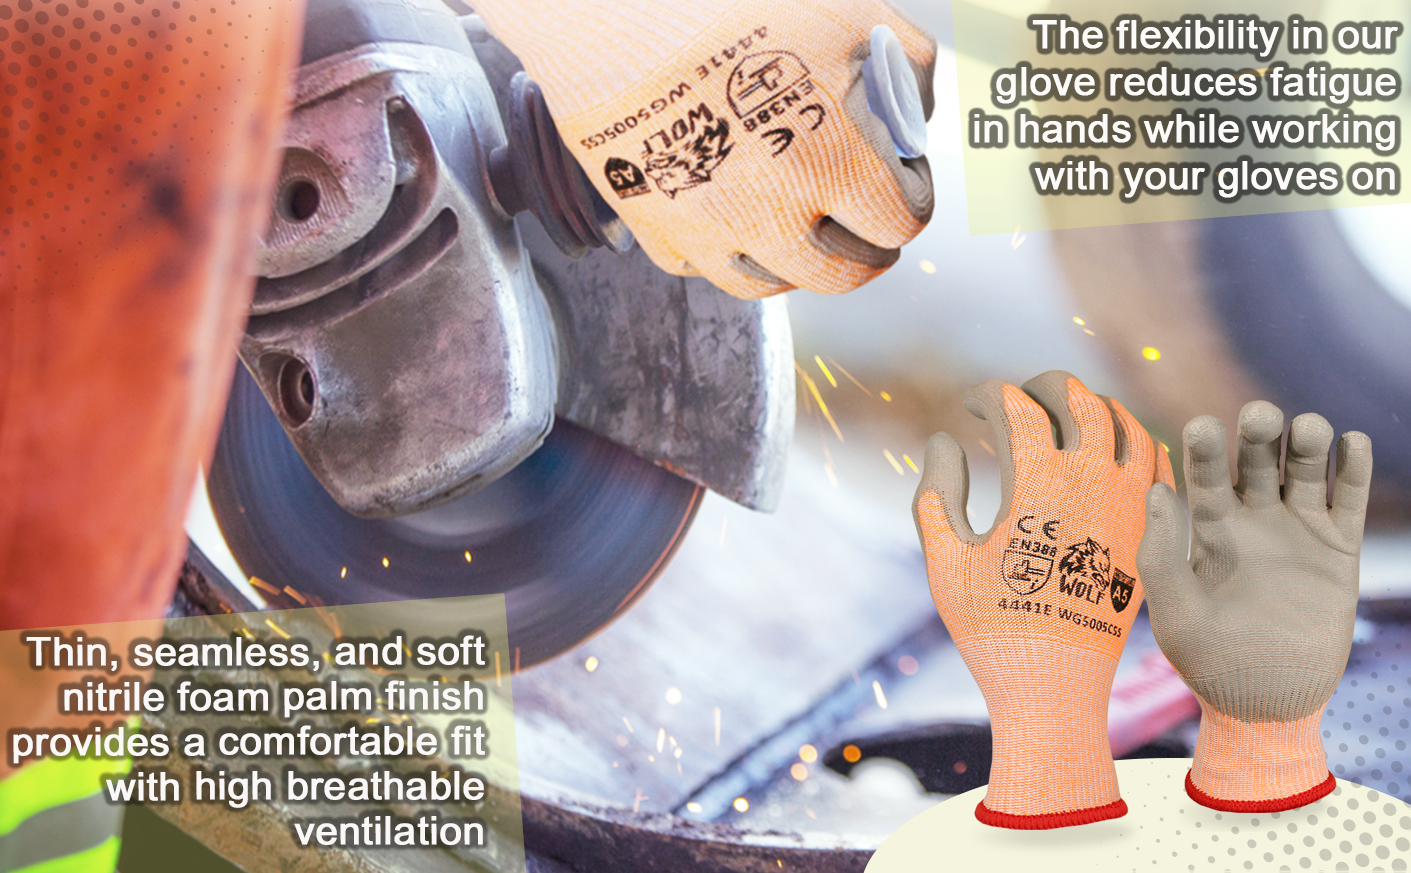 WOLF Hi-Viz Orange A5 Cut Resistant Breathable Polyethylene Grip Palm Seamless Glove Quick One Safety